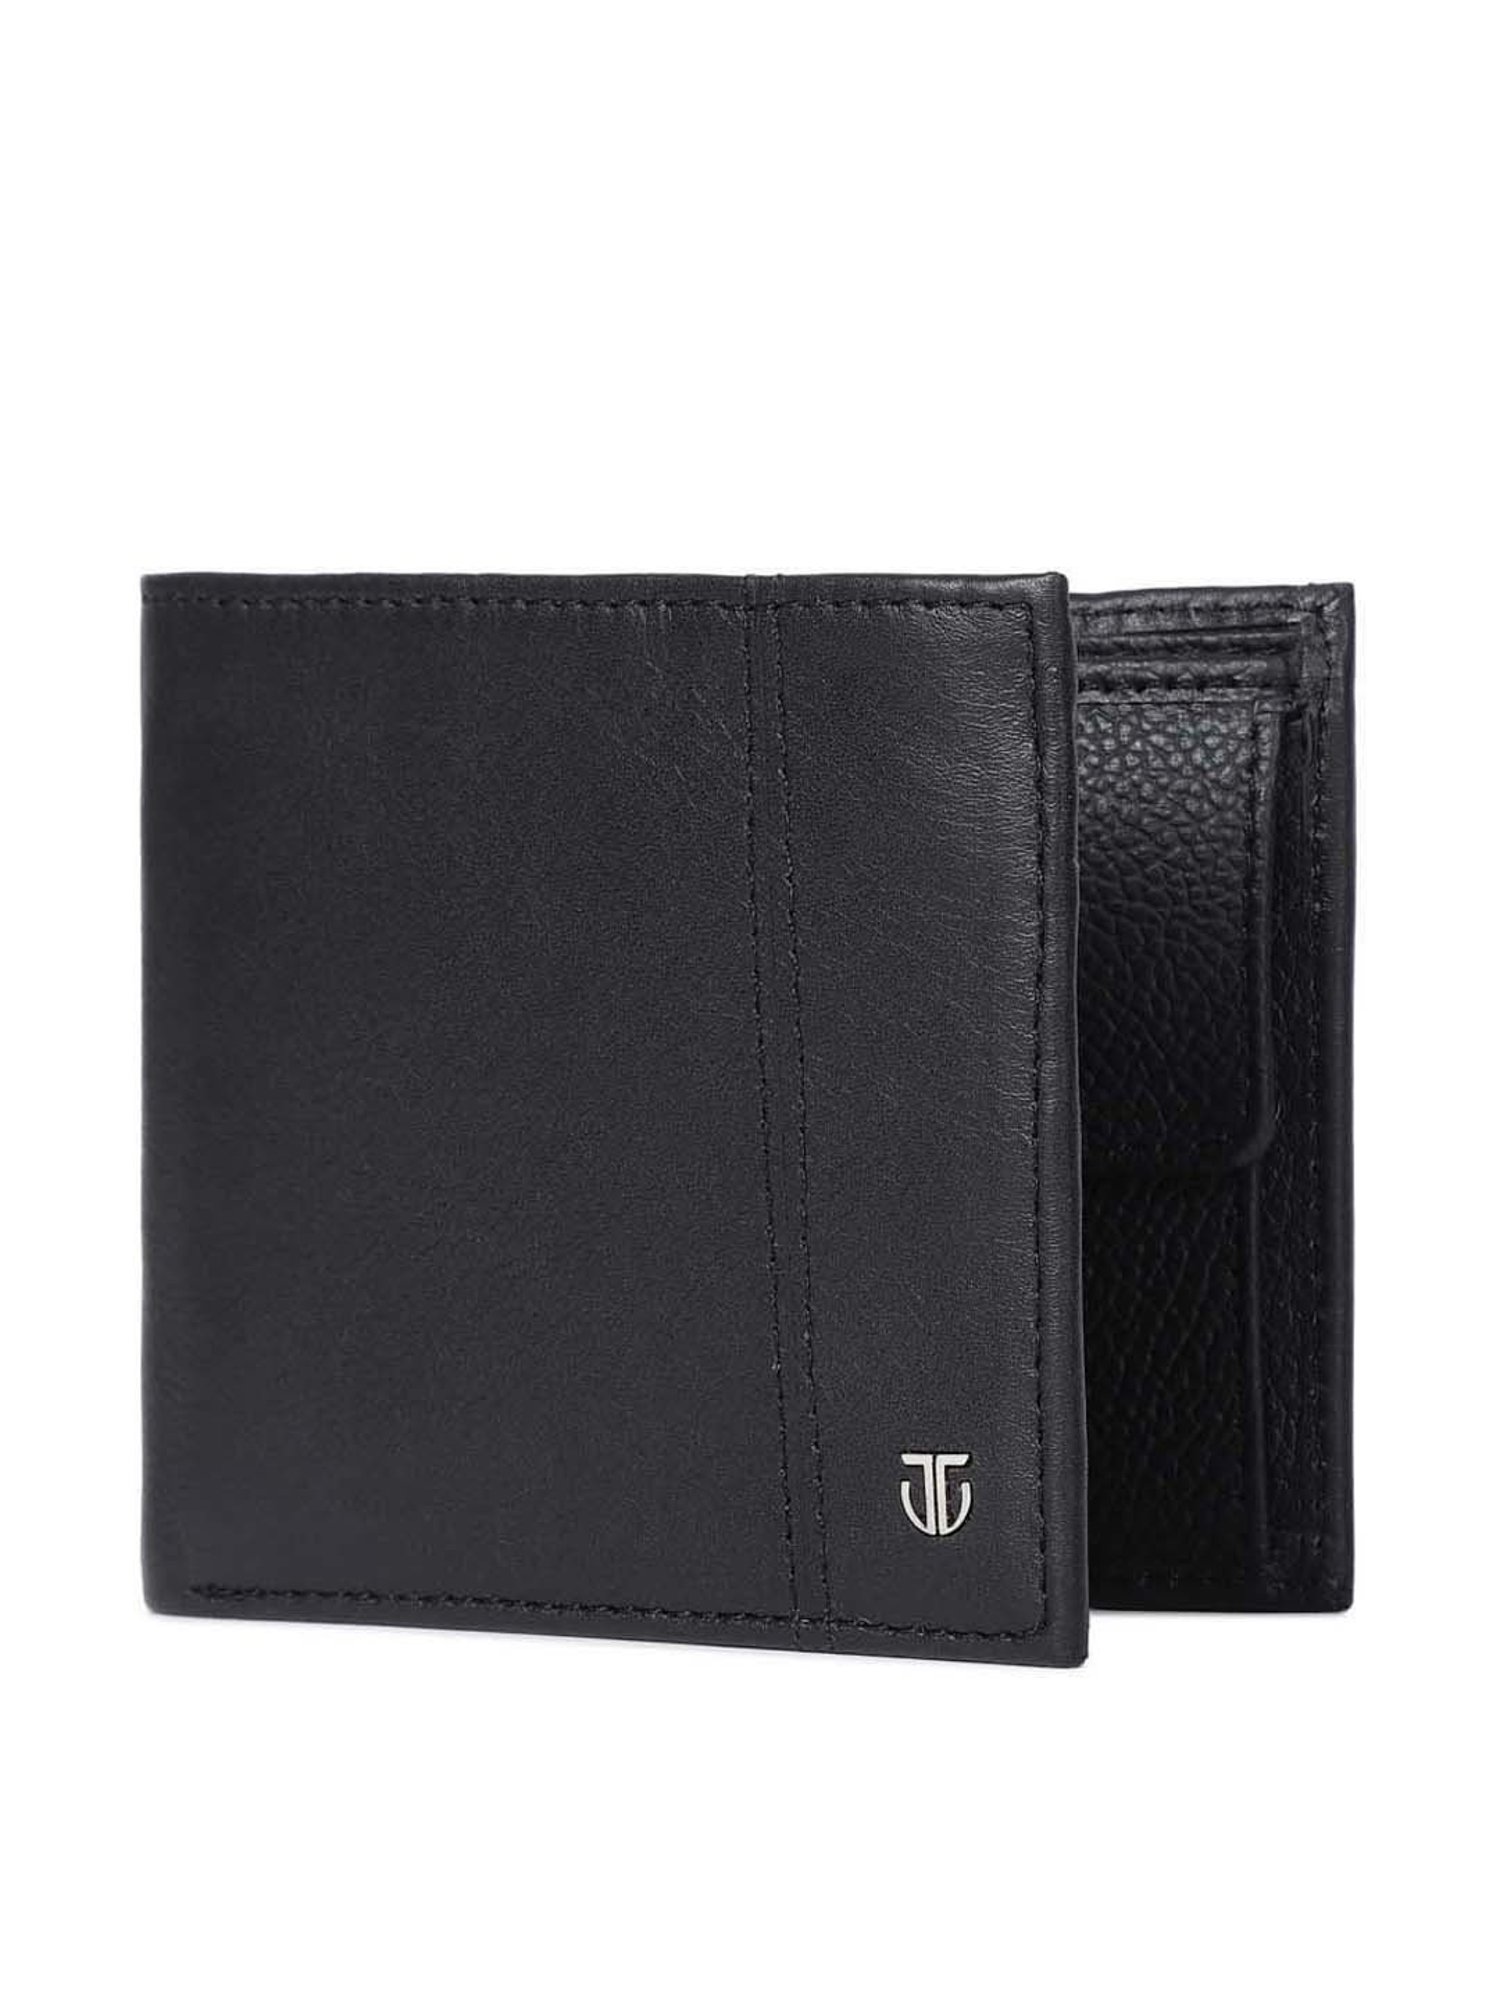 Titan Stylish Brown Original Leather Wallet For Men Free Ship | eBay